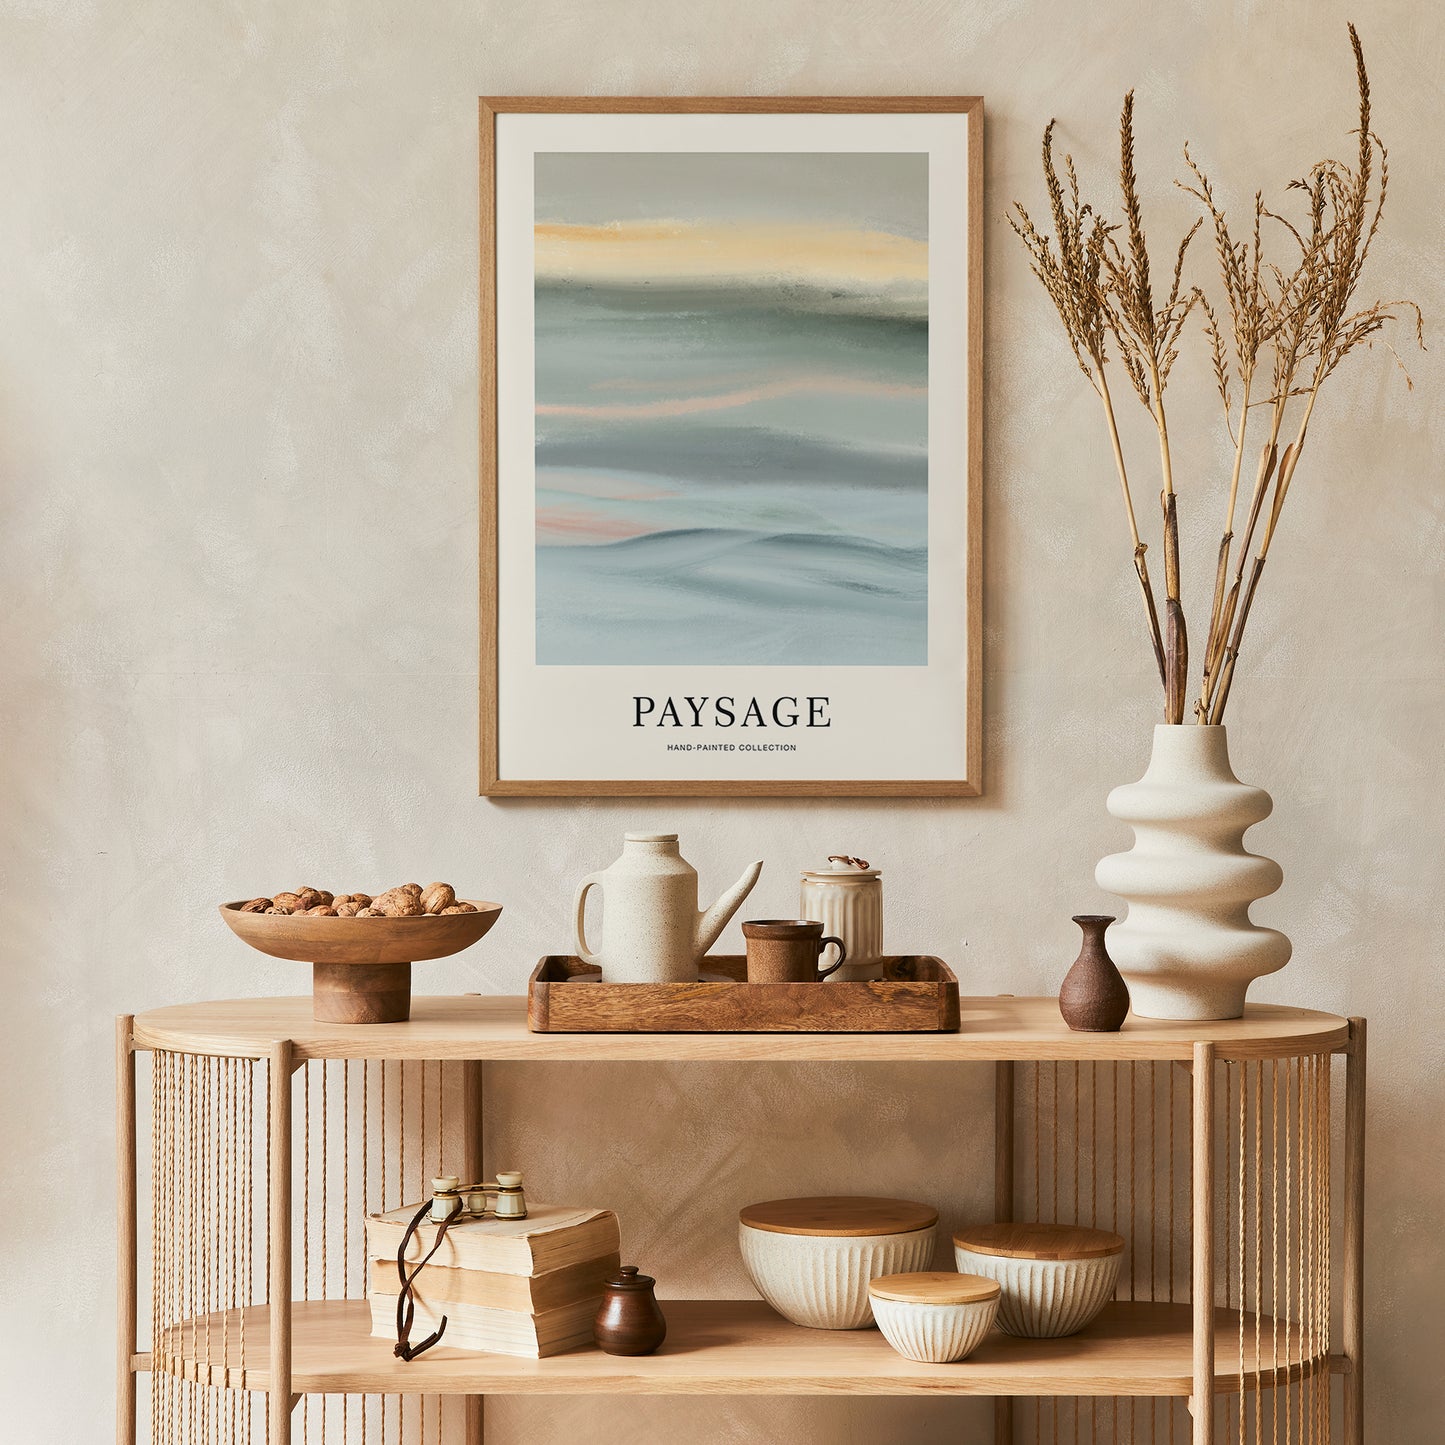 Pastel Sea Paysage No6 Handdrawn Poster